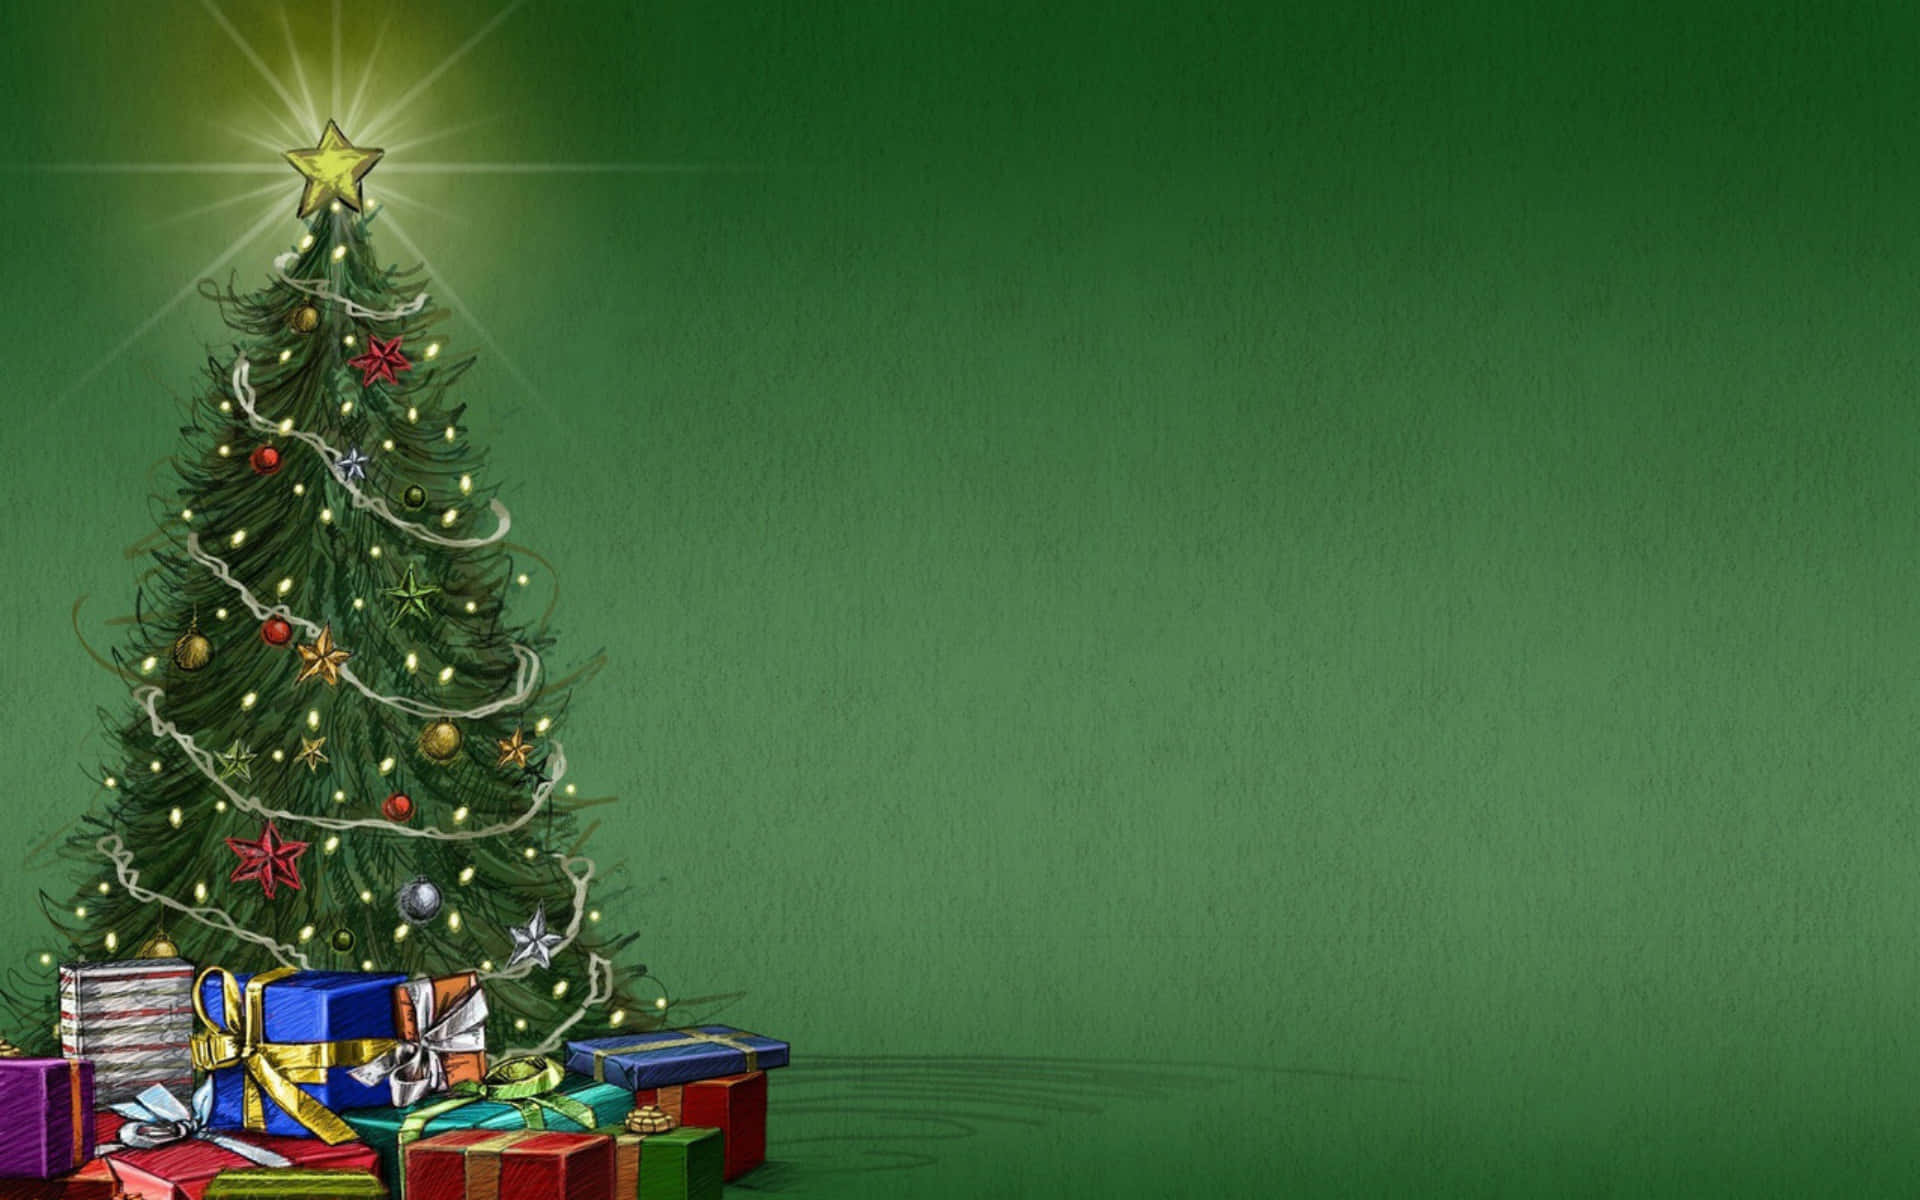 Celebrate The Season With A Festive Christmas Tree